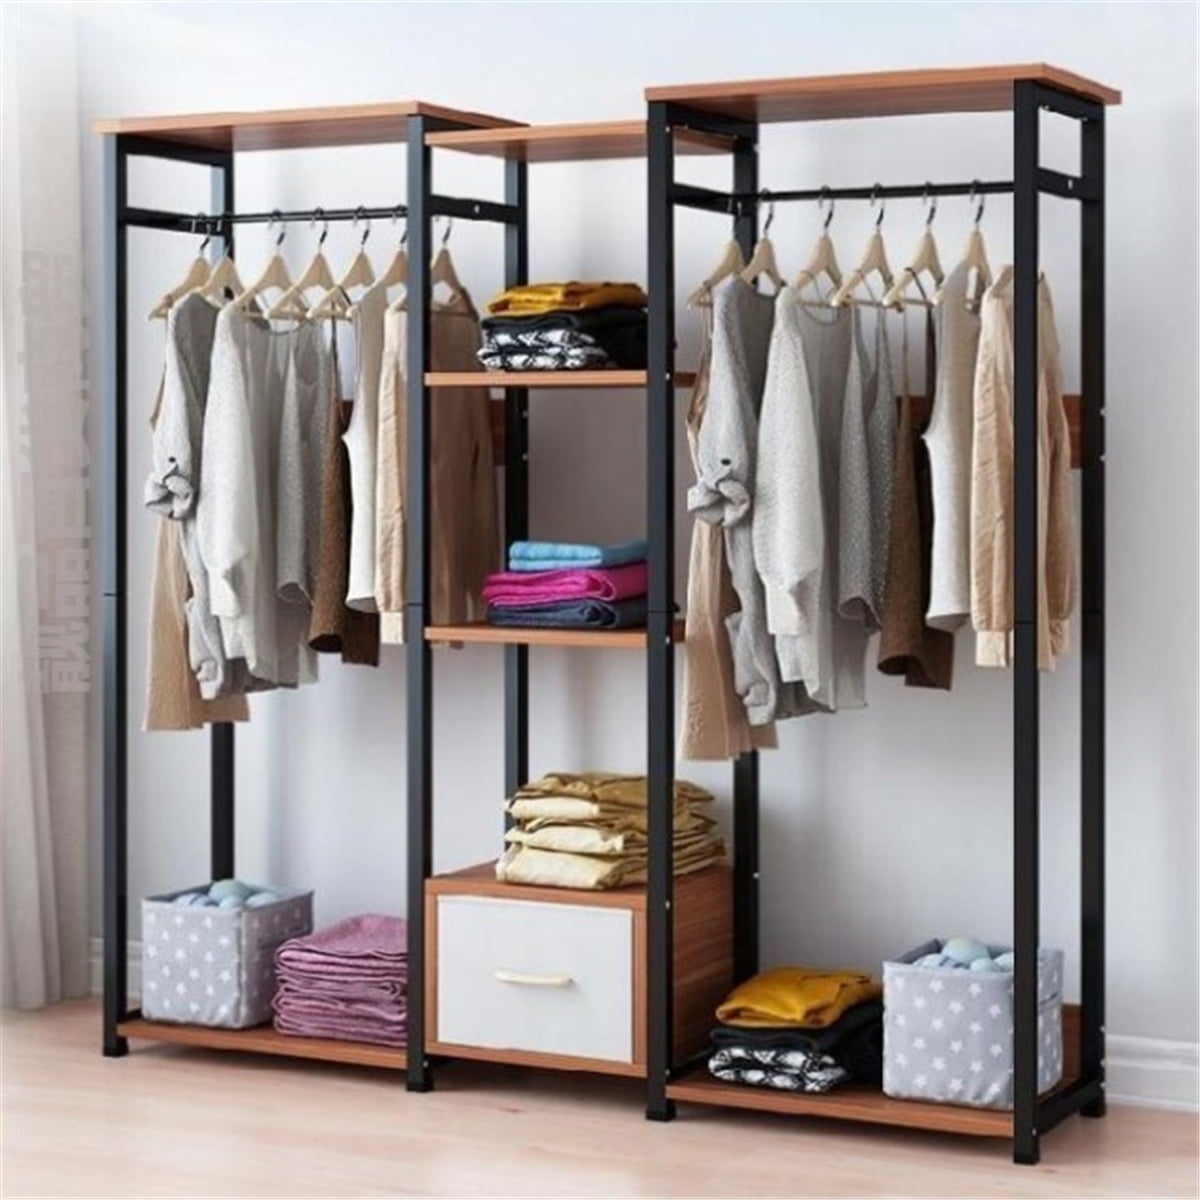 Freestanding Garment Rack Metal Clothes Rack Hanging Storage Organizer Rack Wardrobe with